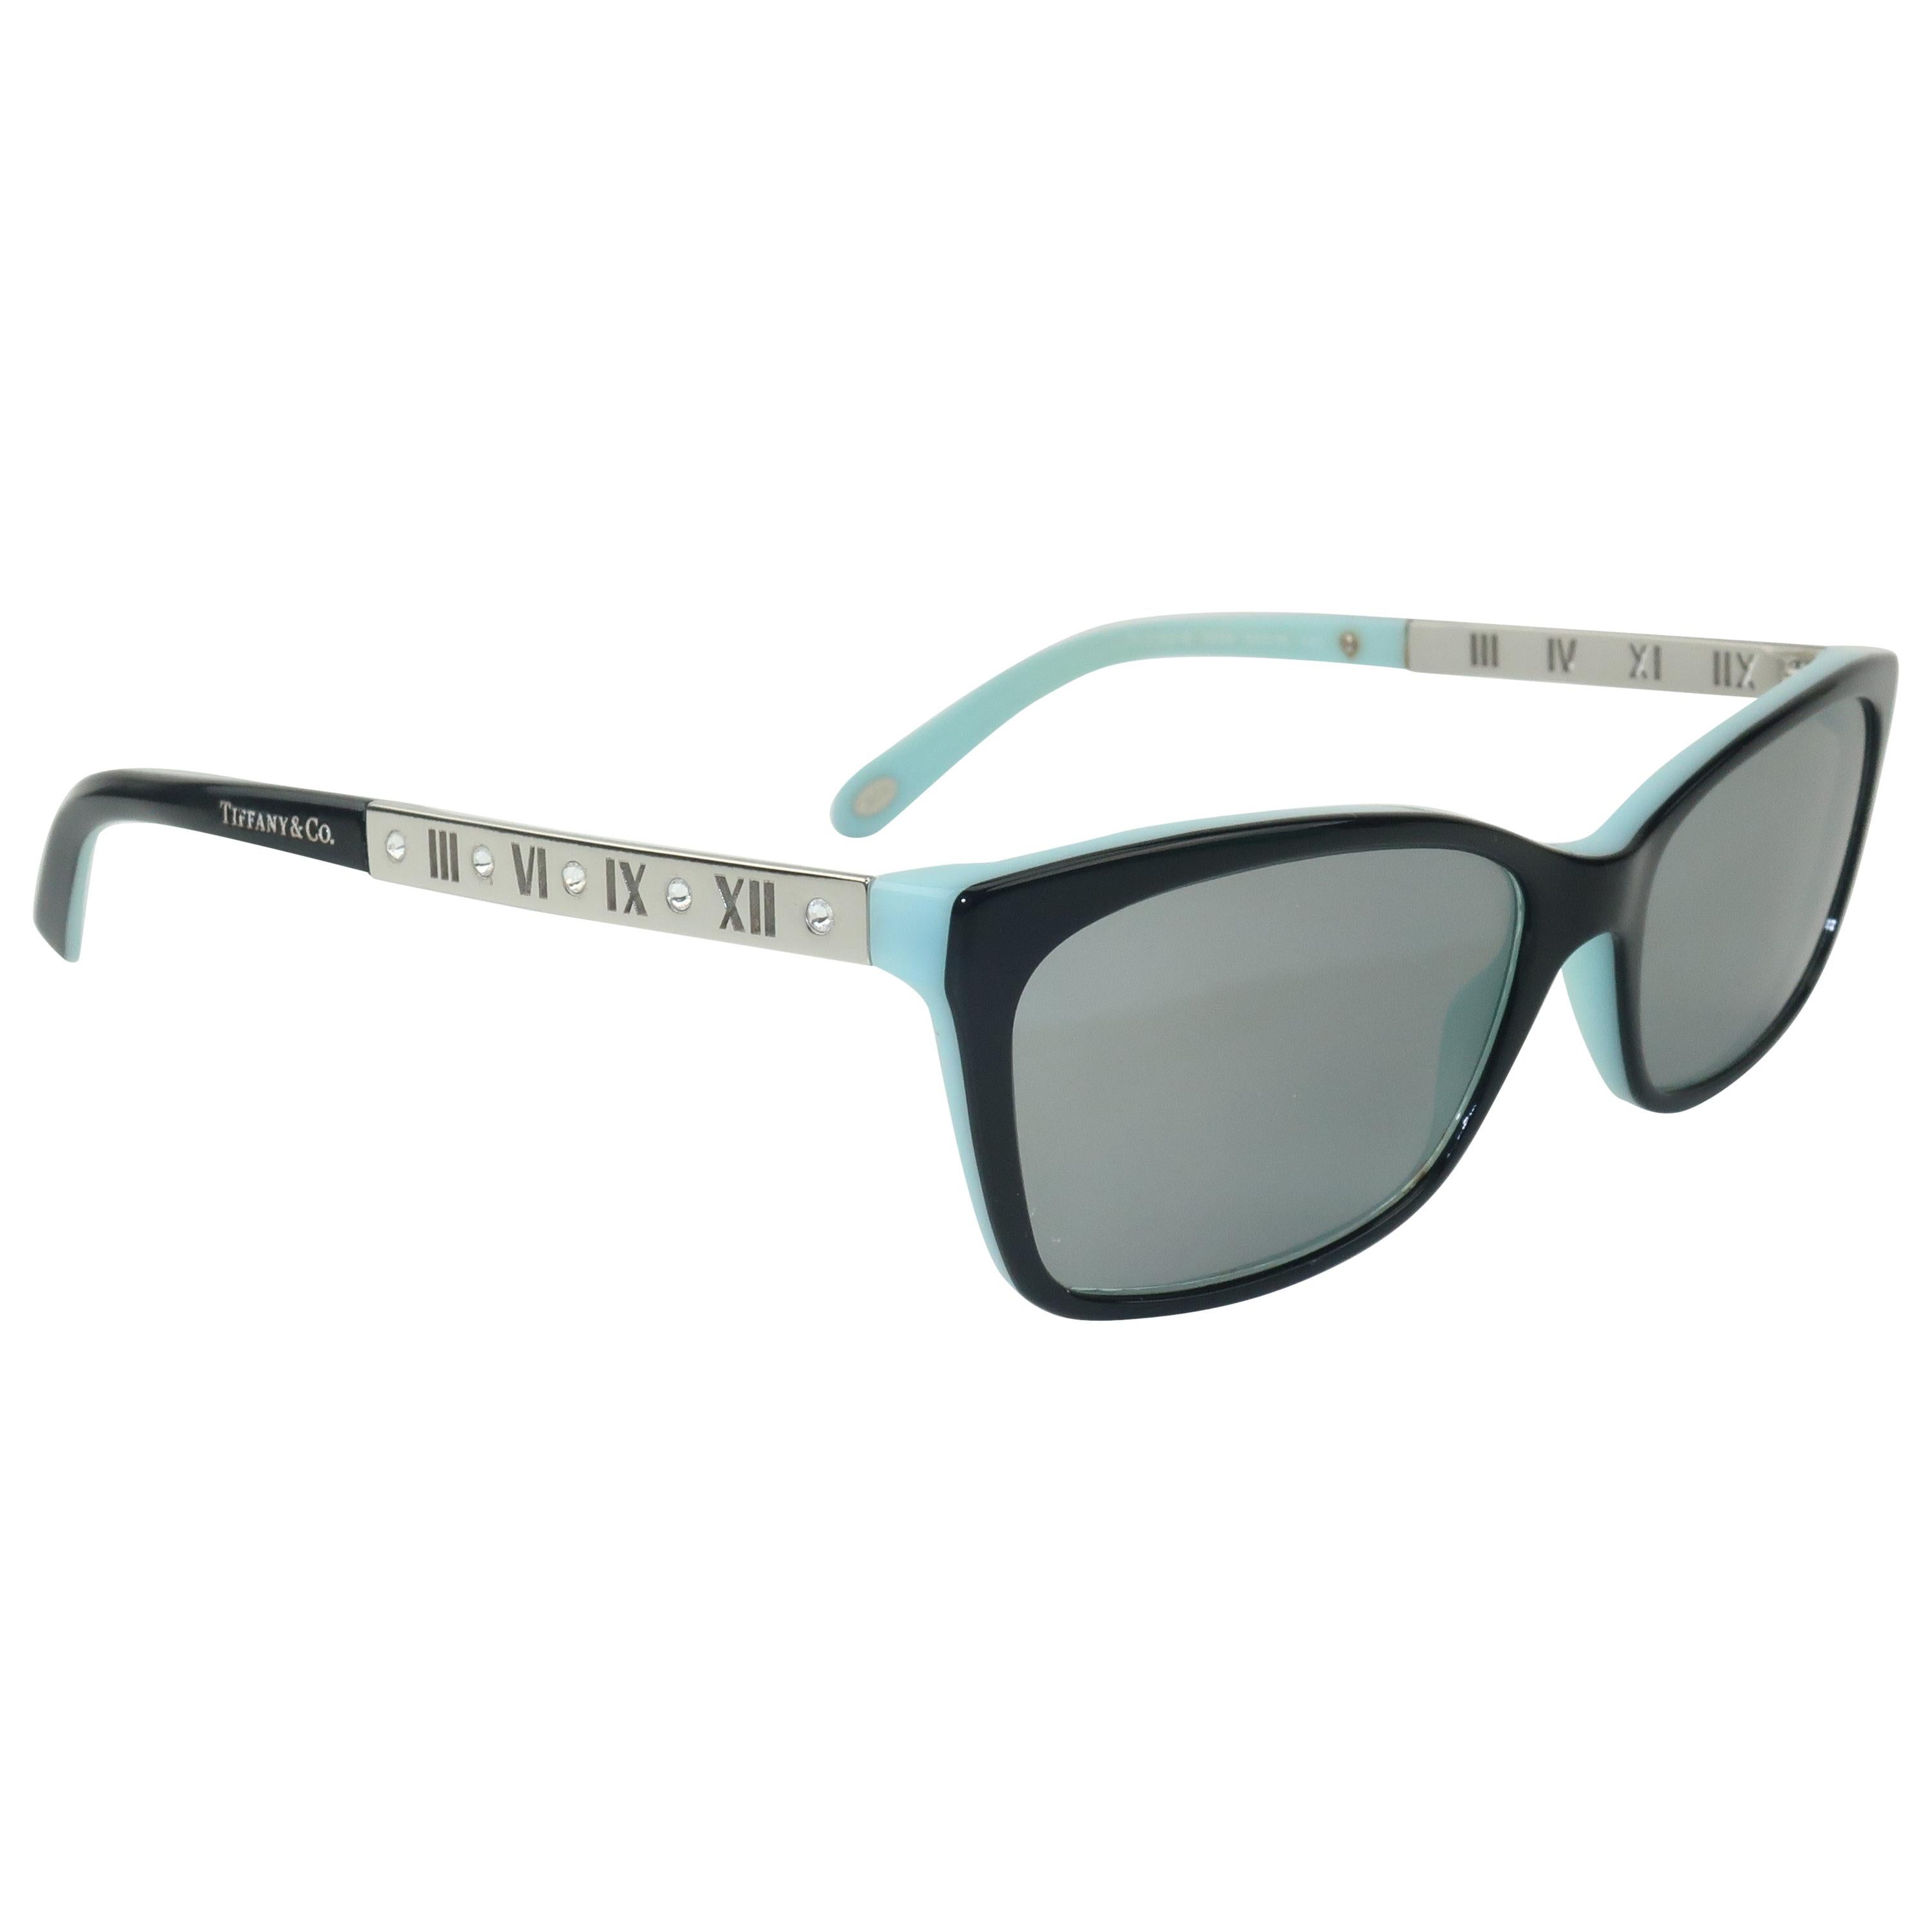 Co. Atlas Black and Blue Sunglasses 